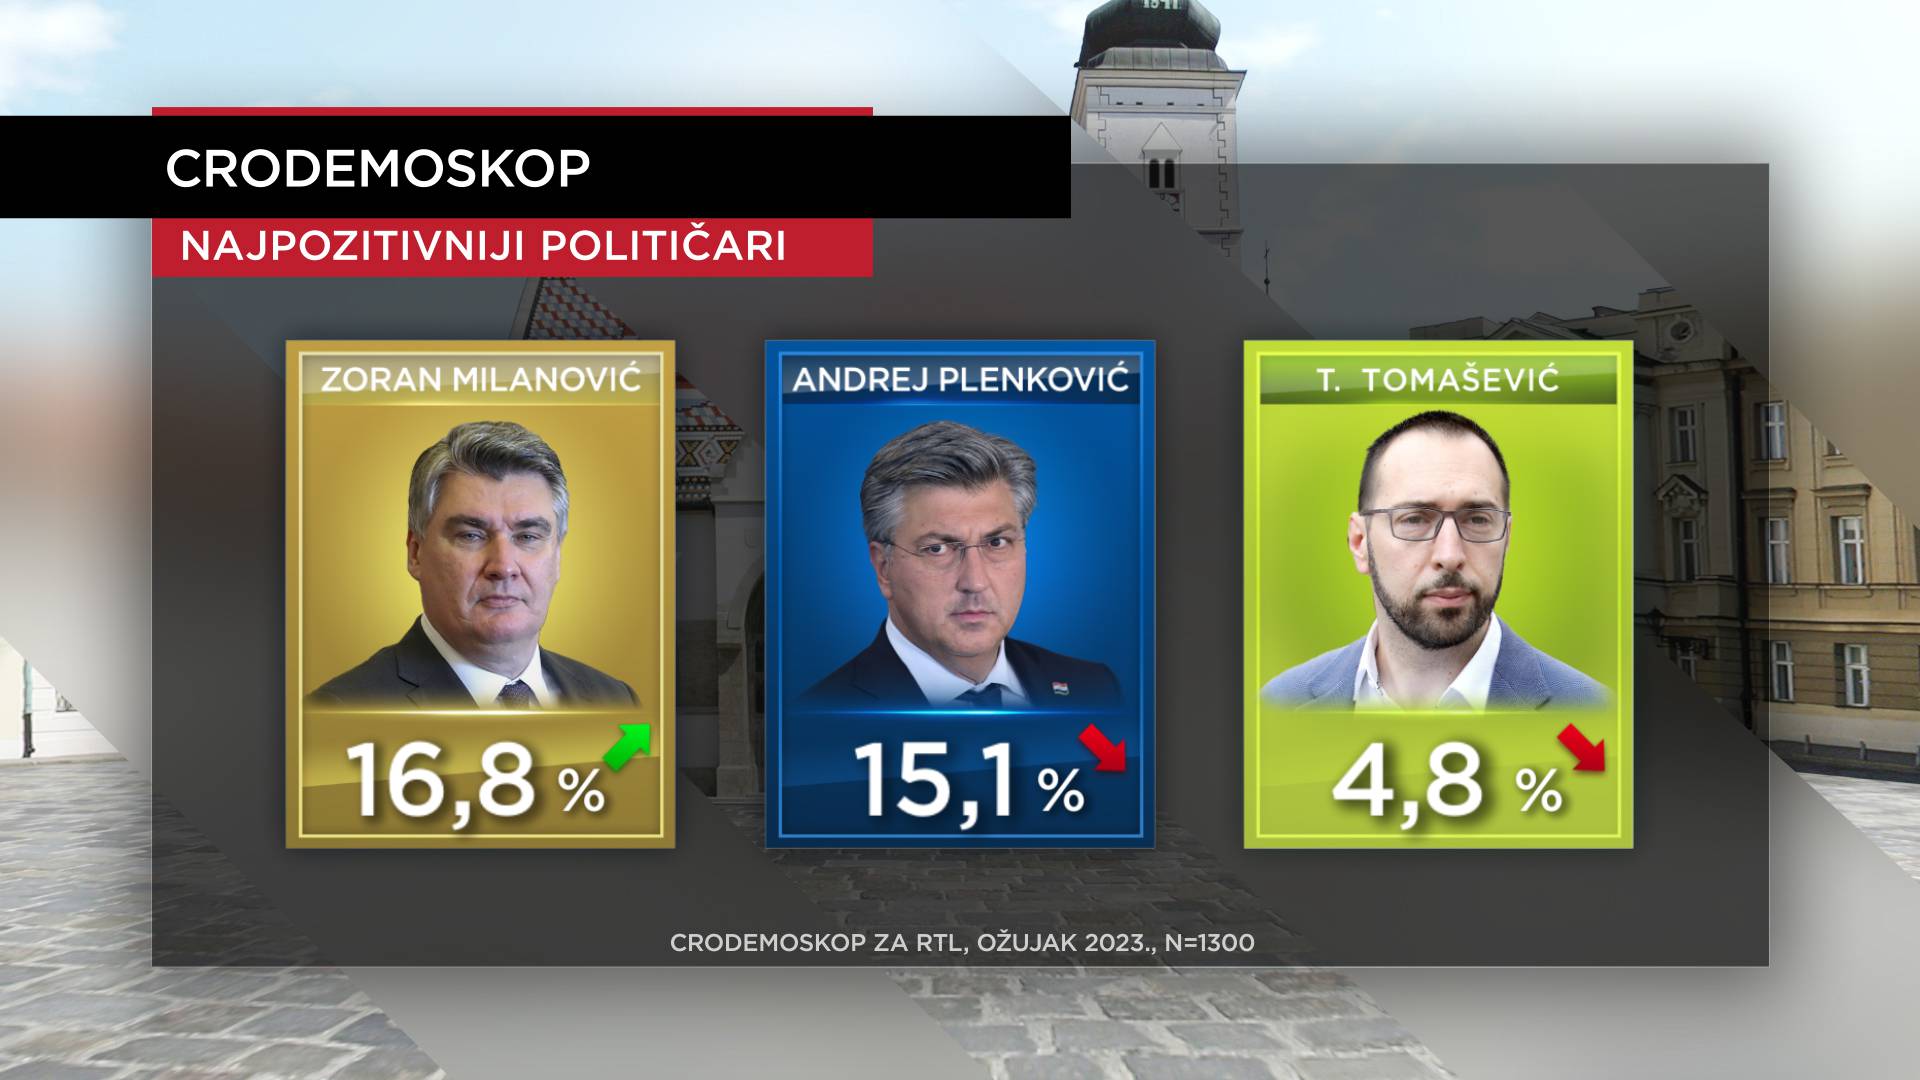 Druga najjača snaga iza HDZ-a su 'neodlučni', najpopularniji političar i dalje Gospodin Nitko